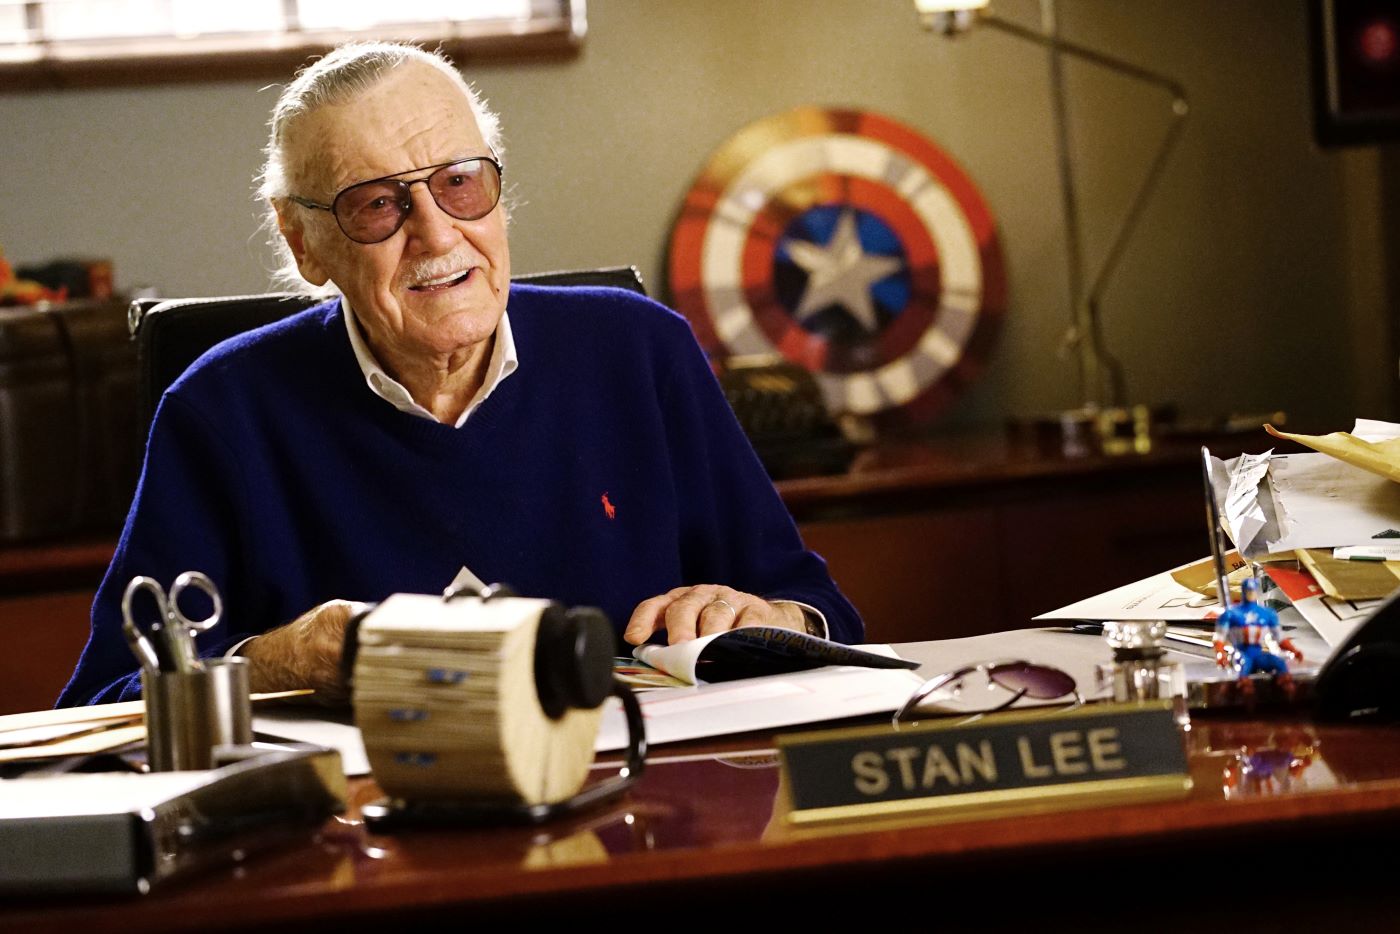 Stan Lee sitting at his desk with marvel memorabilia around him.